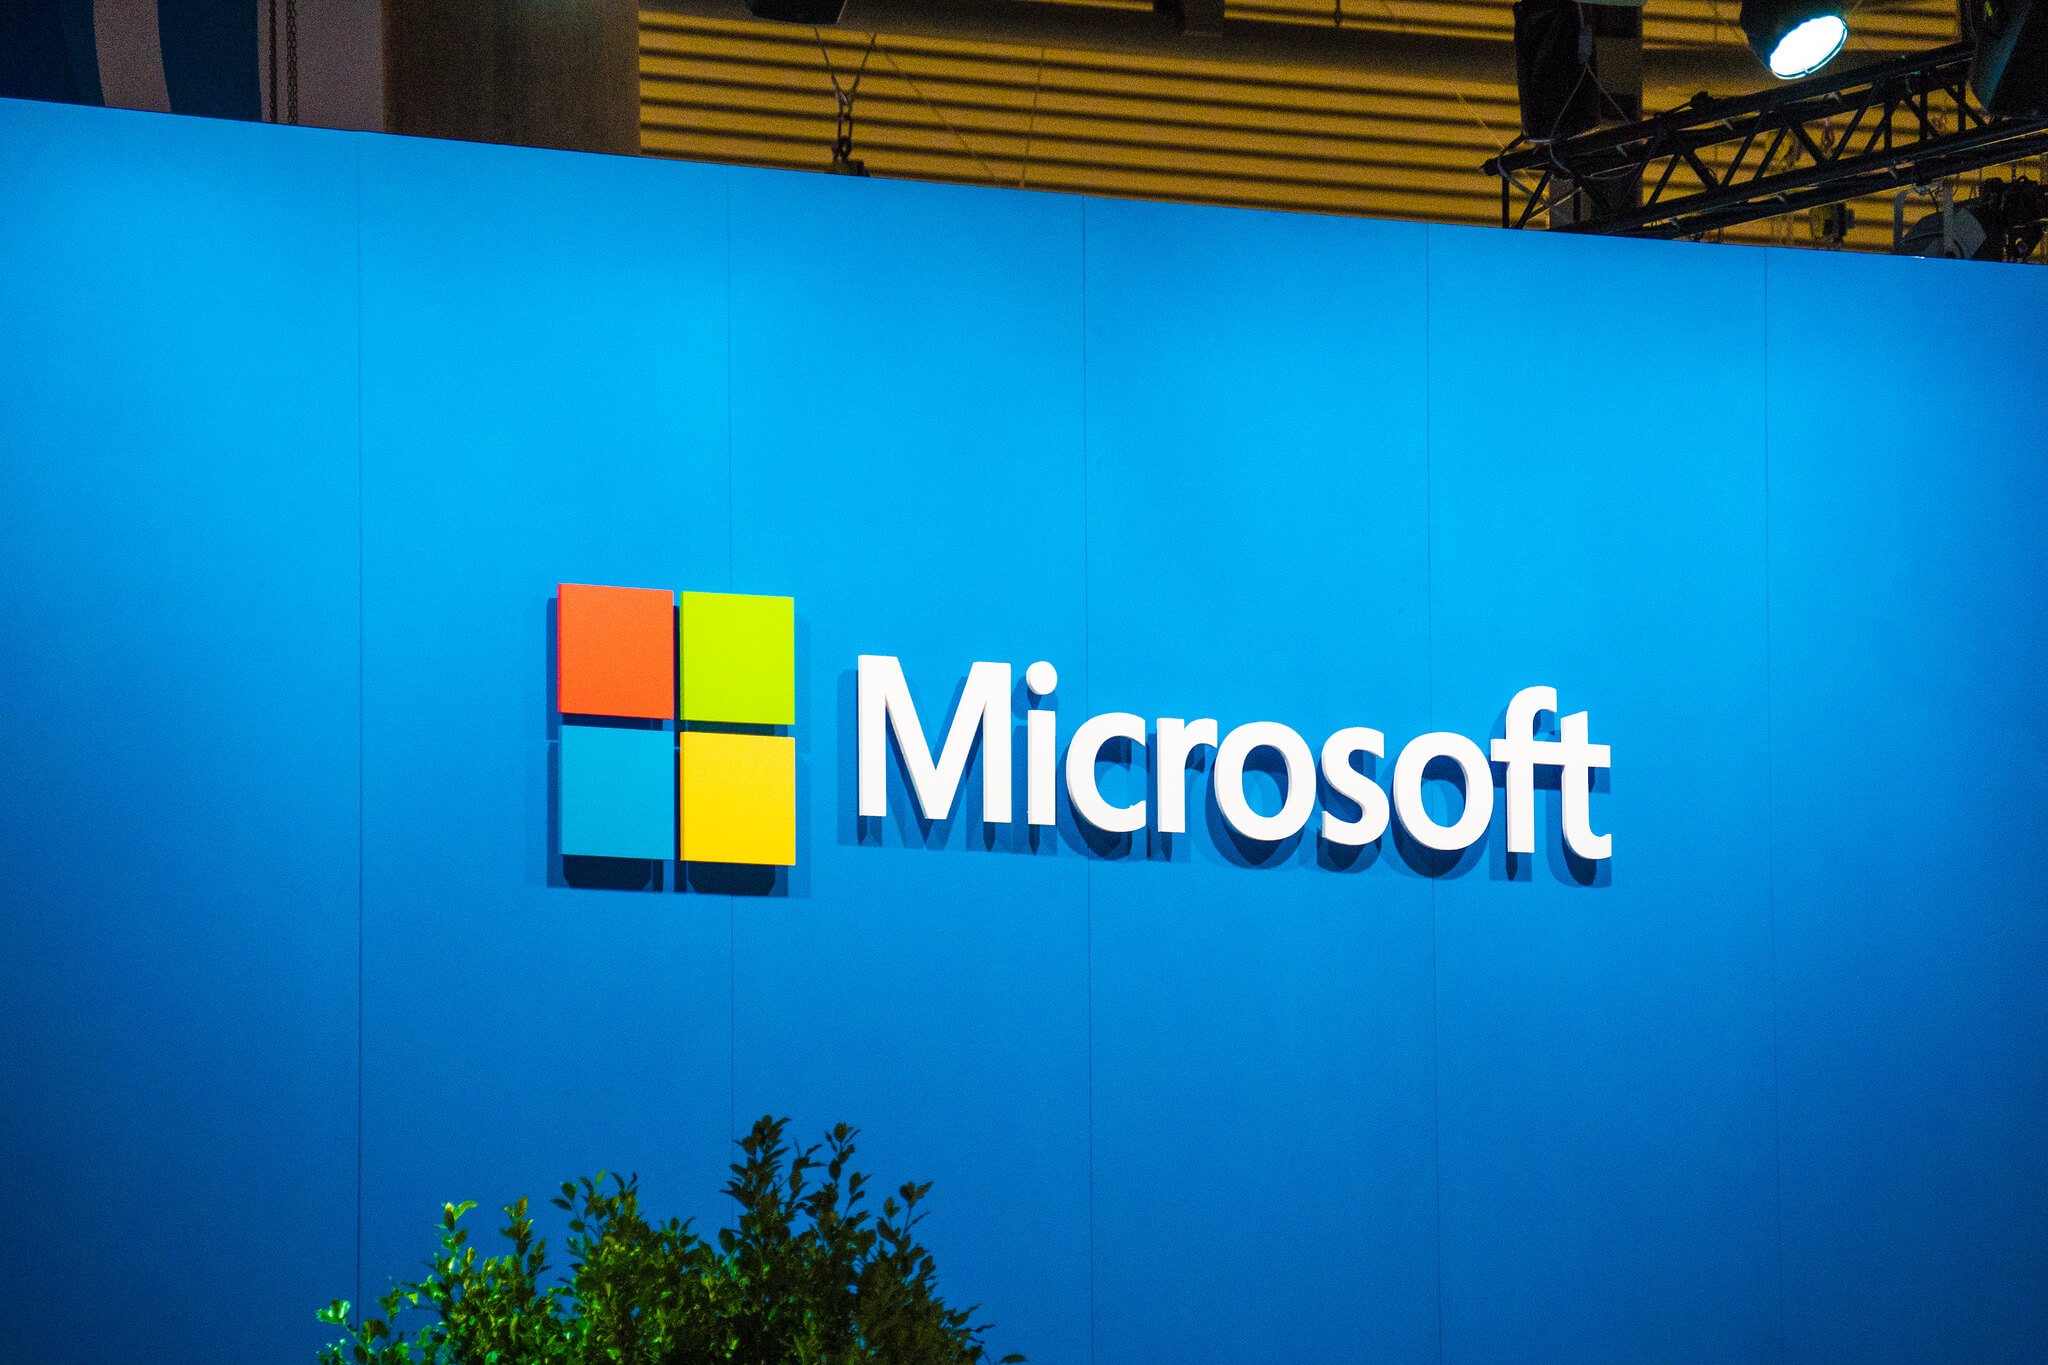 Microsoft definitions. Microsoft. Компания Microsoft. Корпорация Майкрософт. Логотип Microsoft.